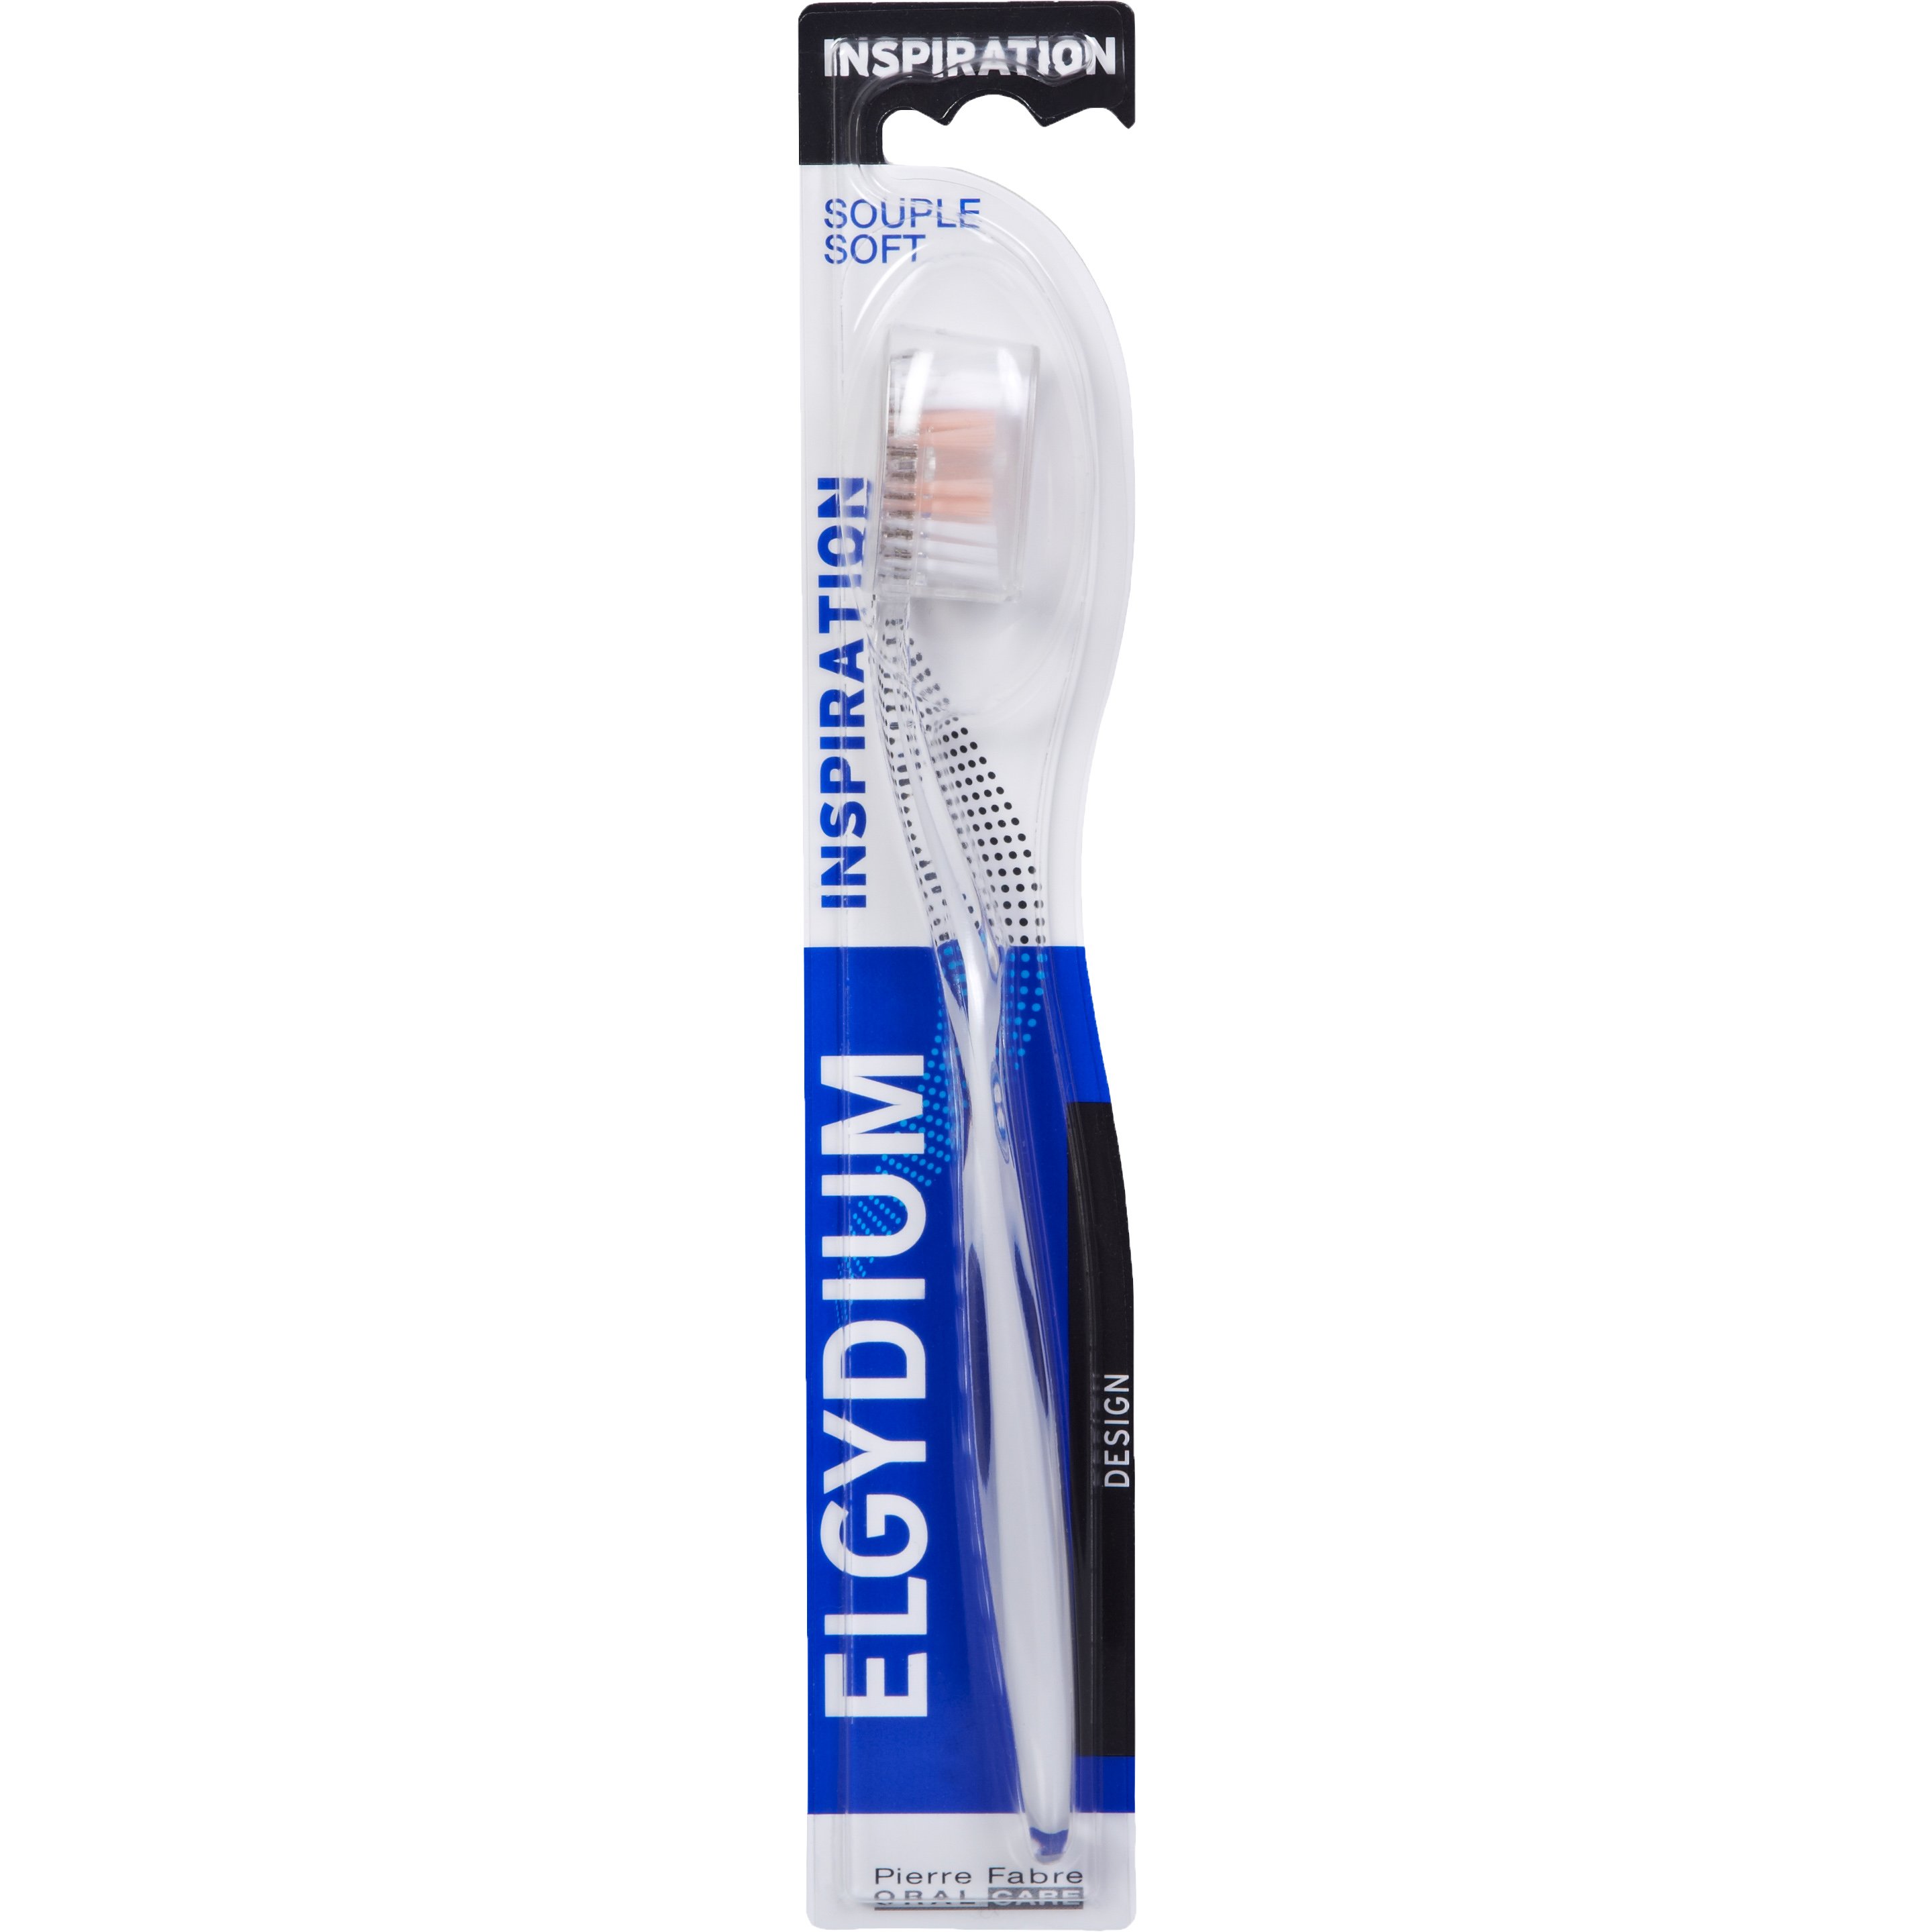 Elgydium Inspiration Medium Εργονομική Οδοντόβουρτσα Για Άνετο Καθαρισμό Και Στα Πιο Δύσκολα Σημεία Μεσαίο Μέγεθος 1 τμχ – κόκκινο